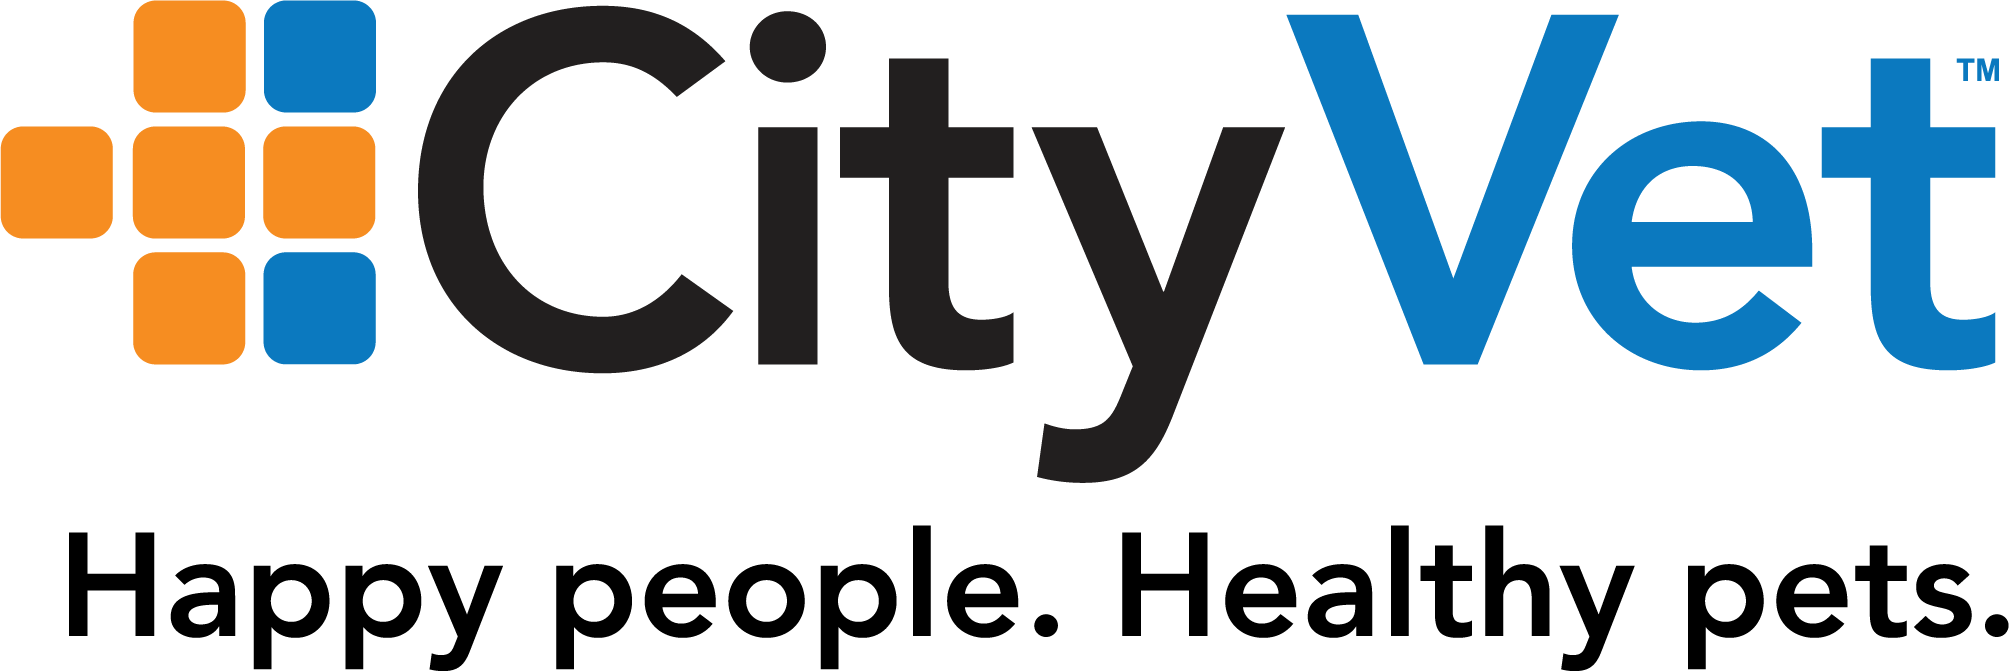 CityVet acquires another San Antonio hospital 